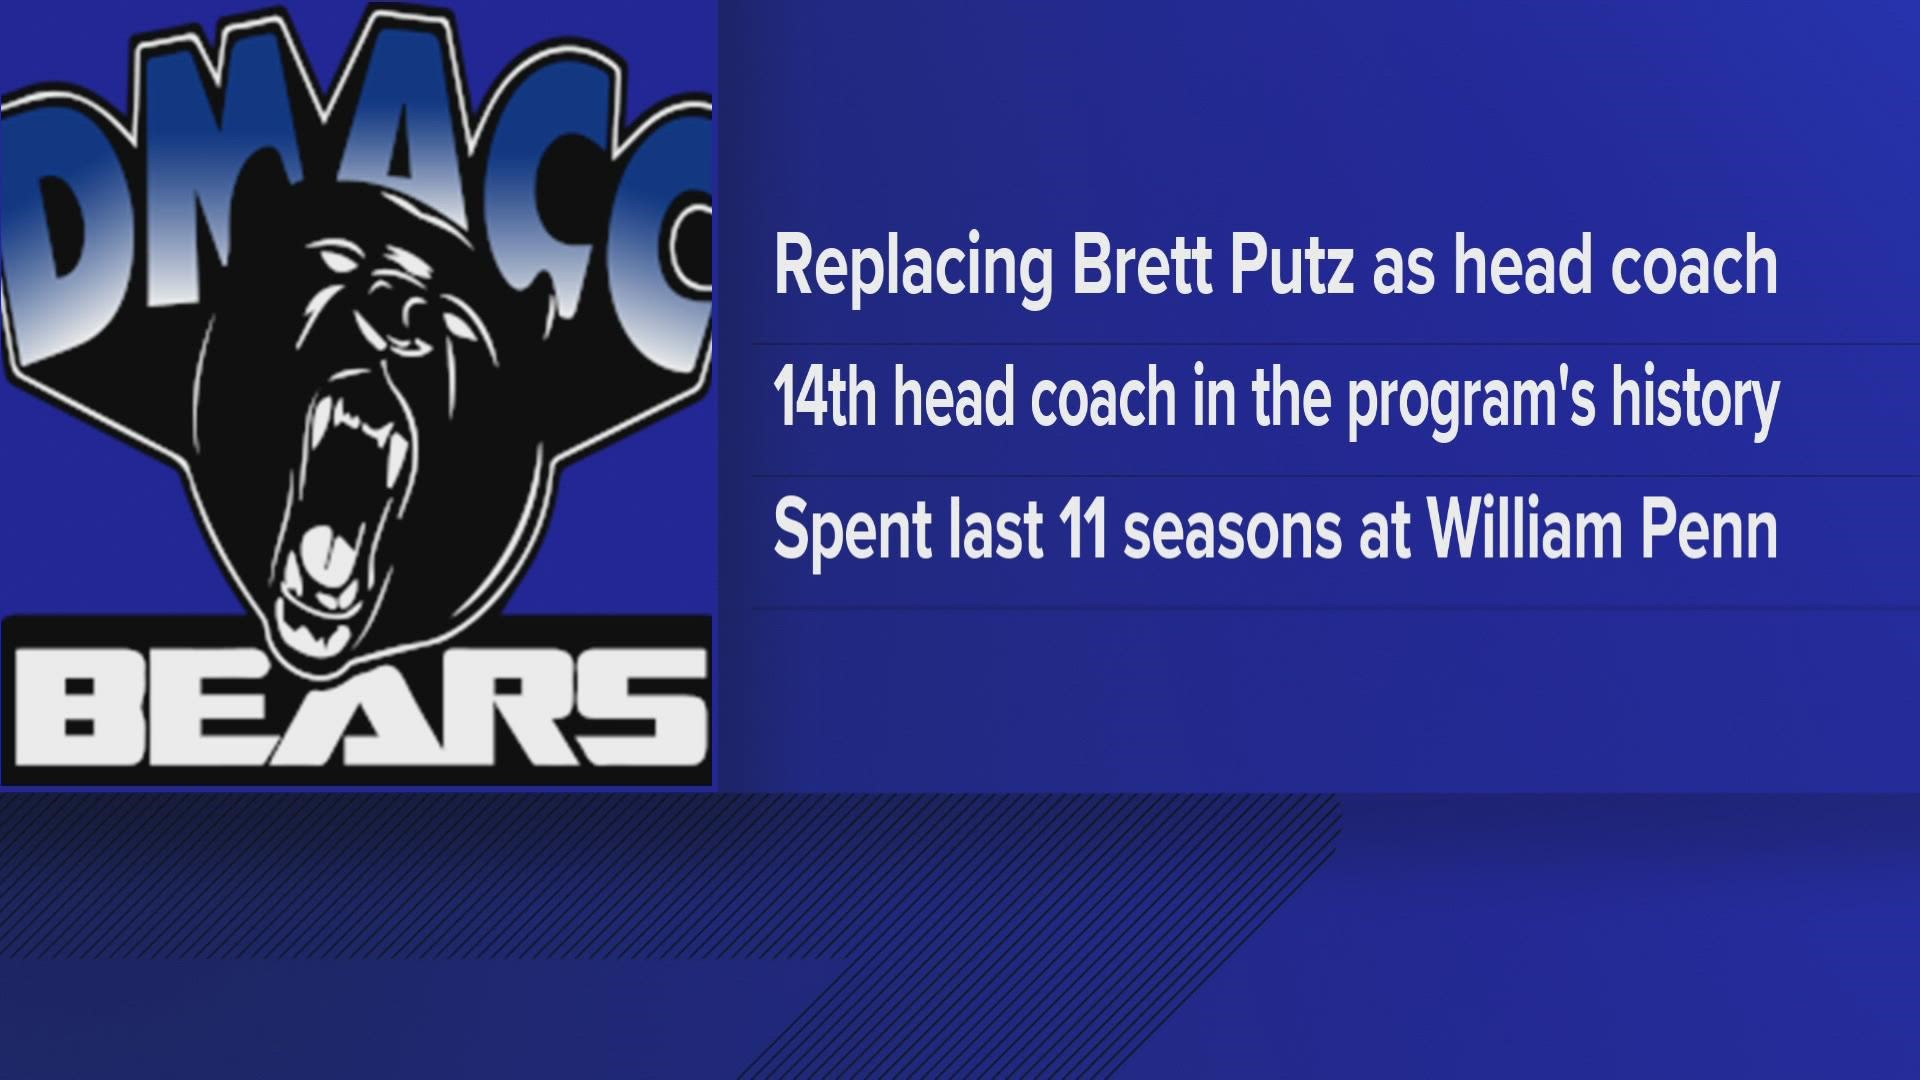 Blake Sandquist will replace Brett Putz. Sandquist spent 11 seasons at William Penn University and will be DMACC's 14th head coach in the program's history.